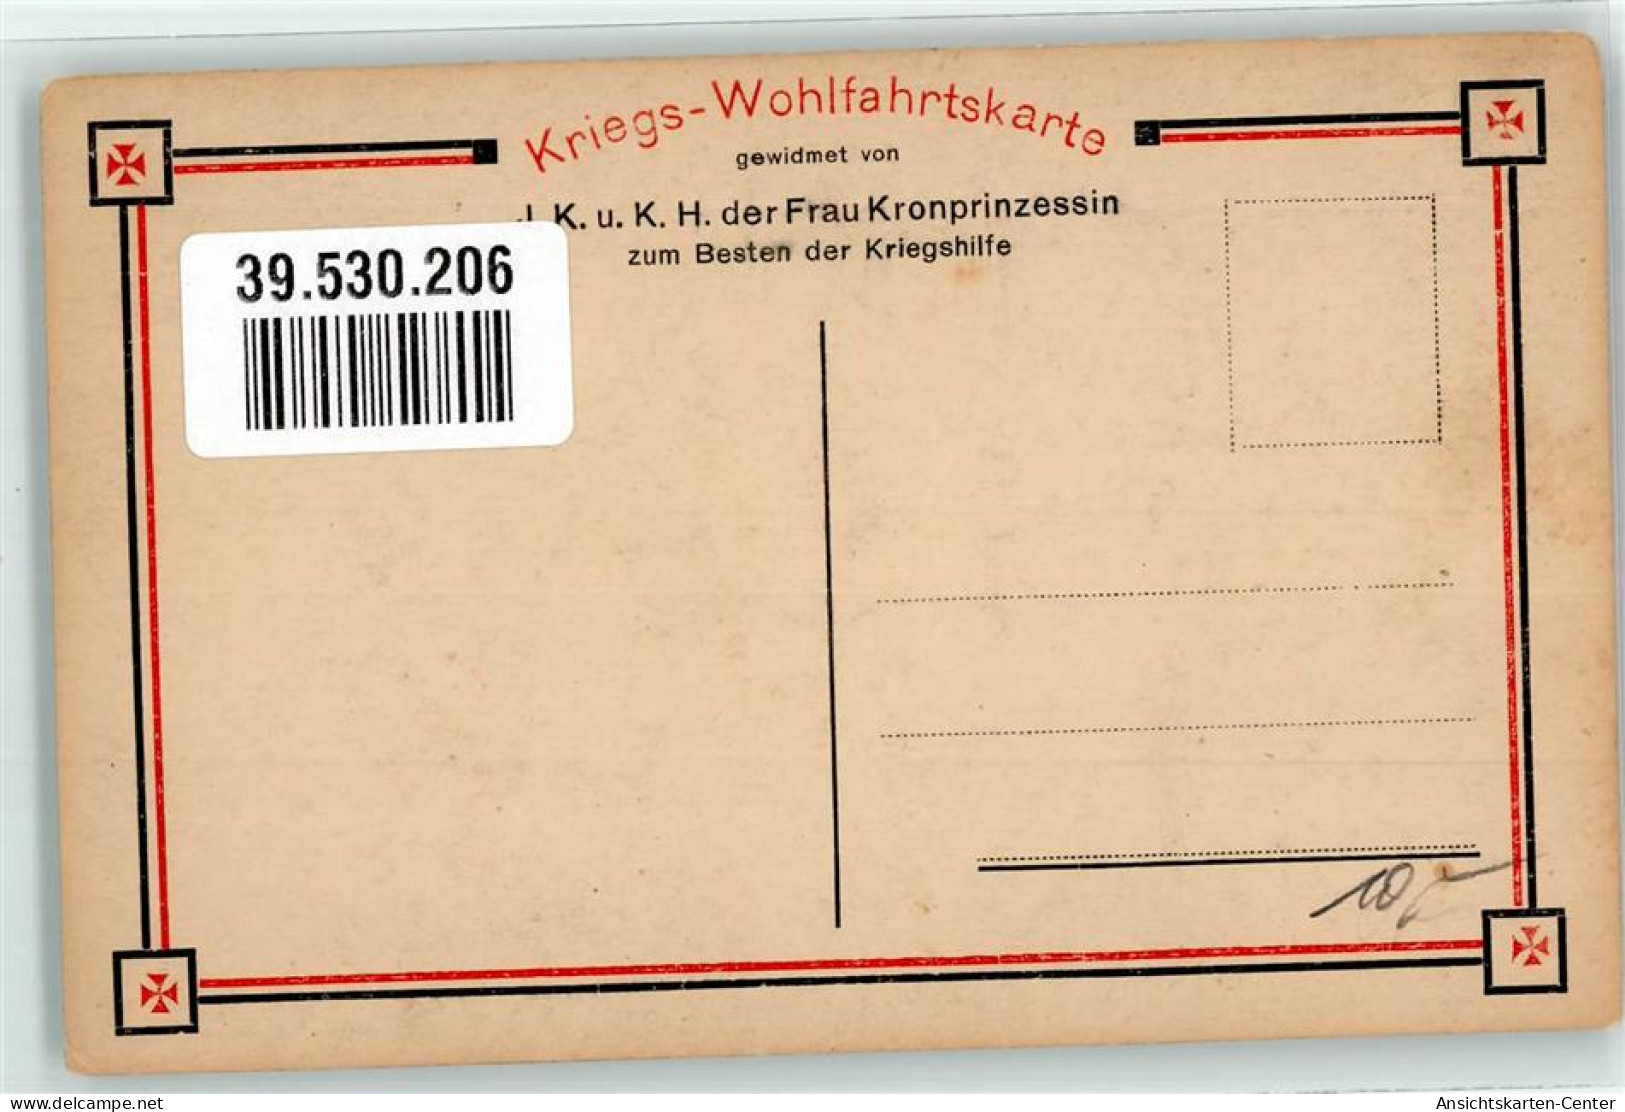 39530206 - NPG Nr.4872  Autograph Kriegs Wohlfahrtskarte - Königshäuser